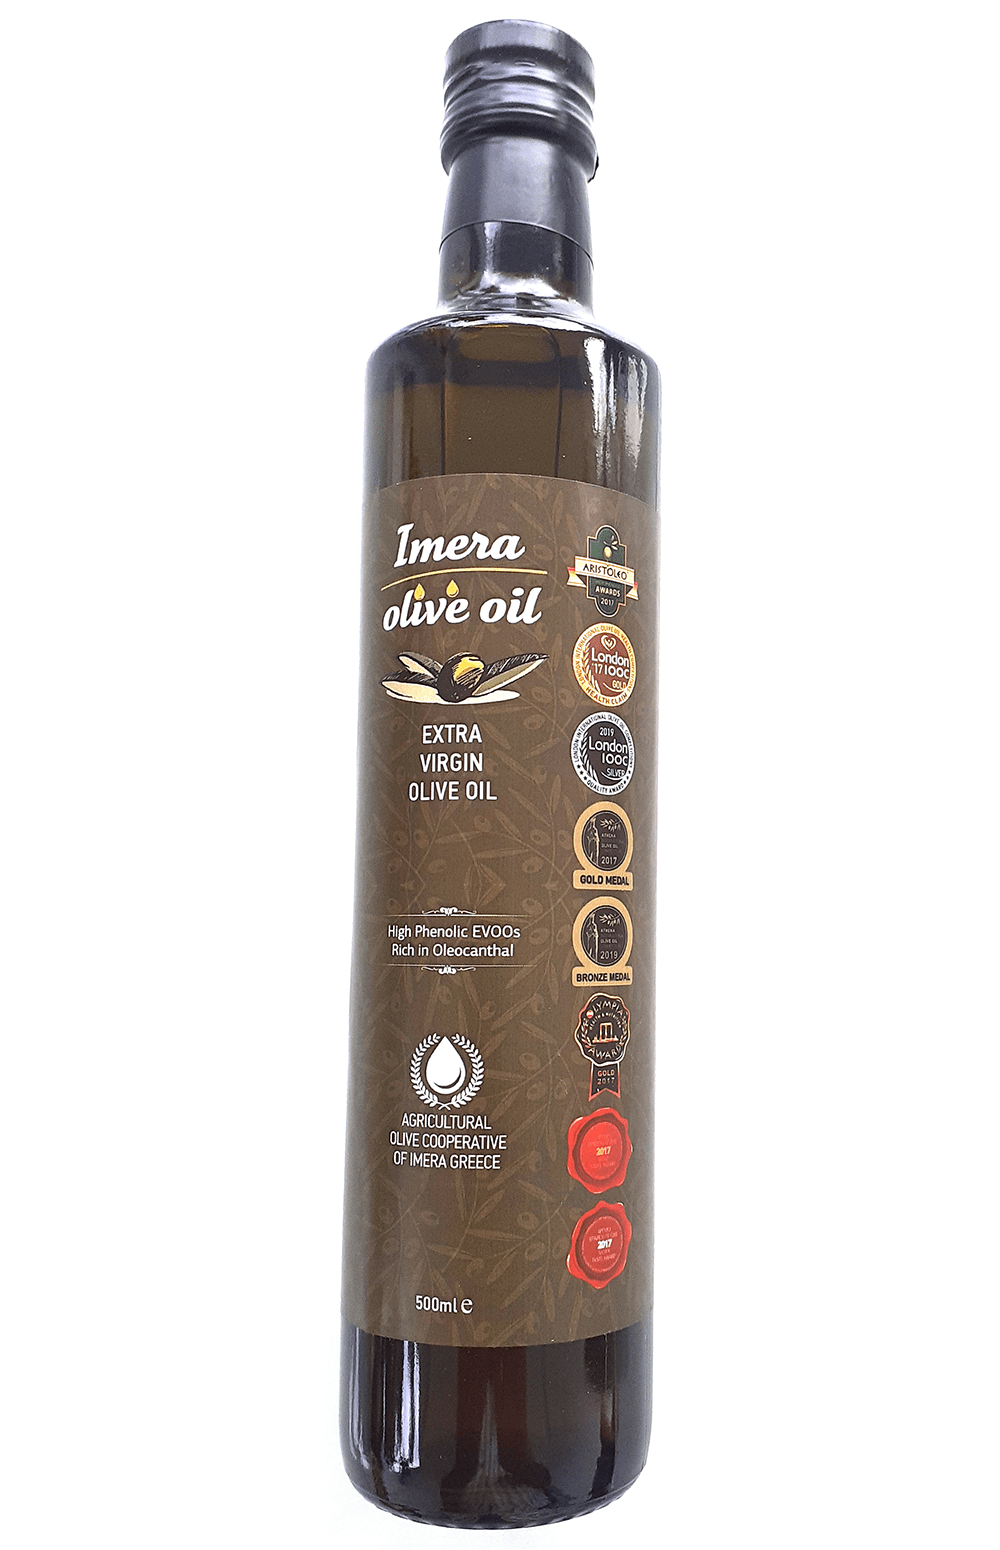 Imera olive oil